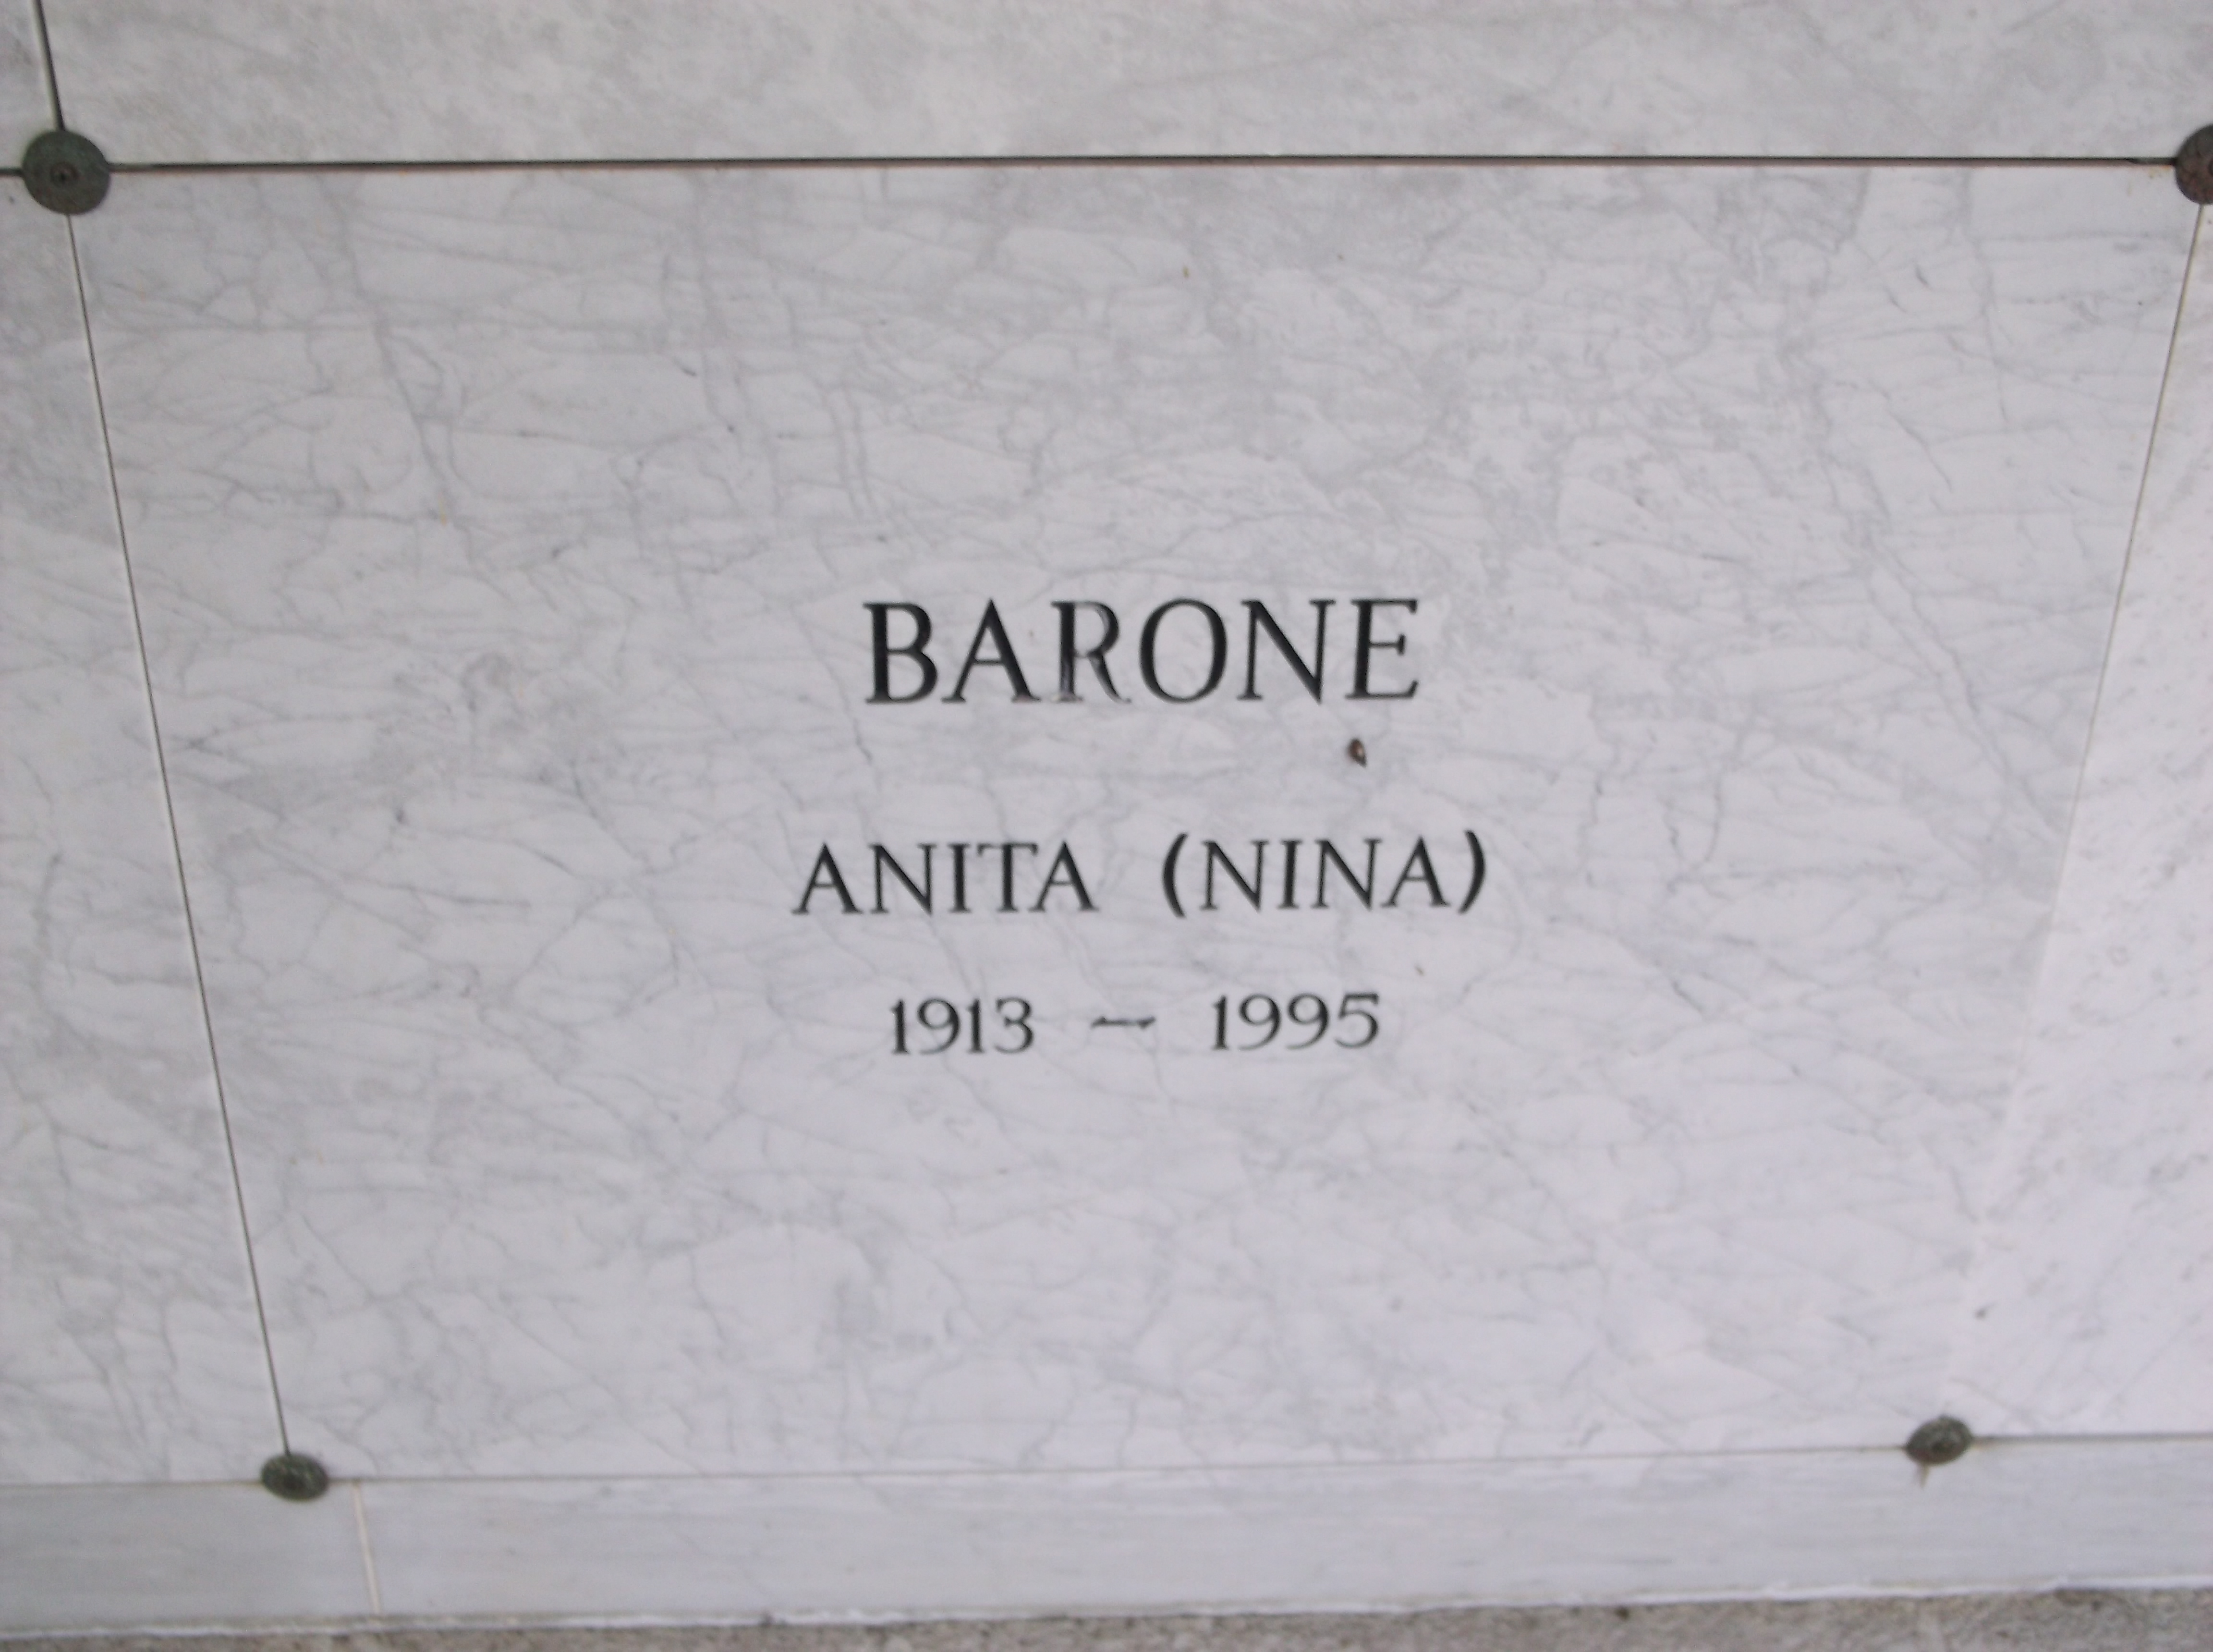 Anita "Nina" Barone